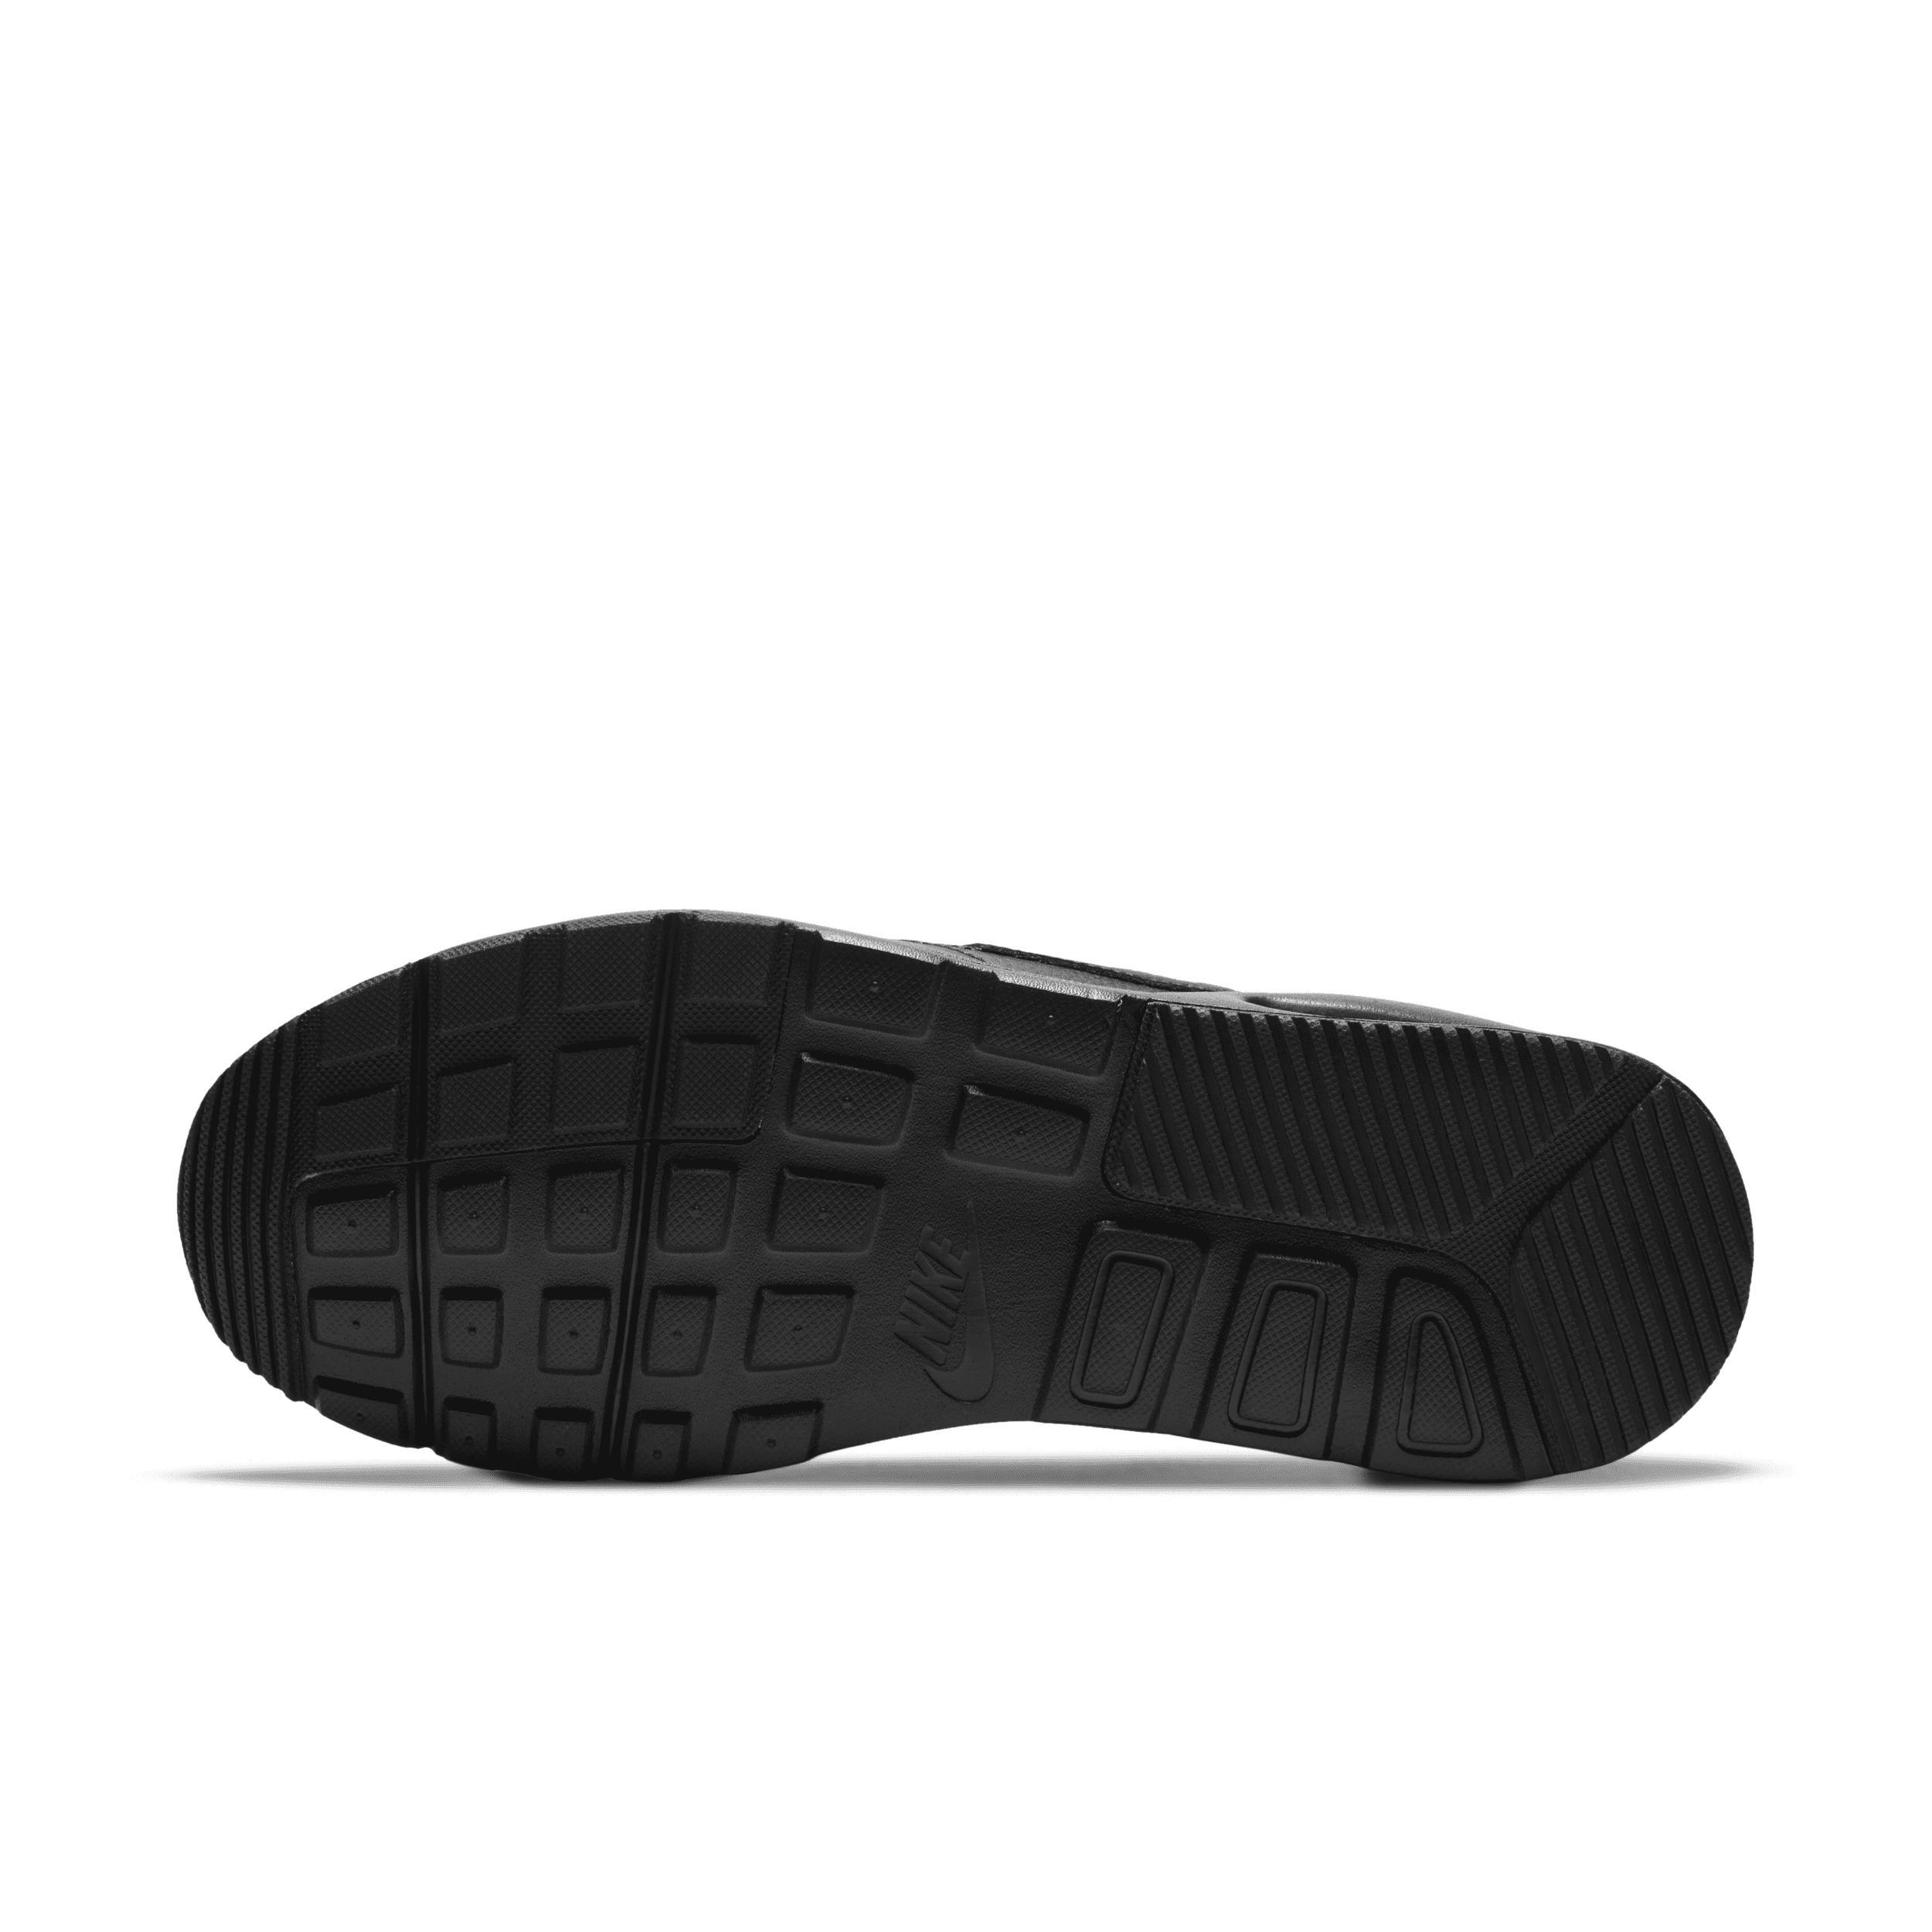 Nike Mens Nike Air Max SC - Mens Running Shoes Black/Black Product Image